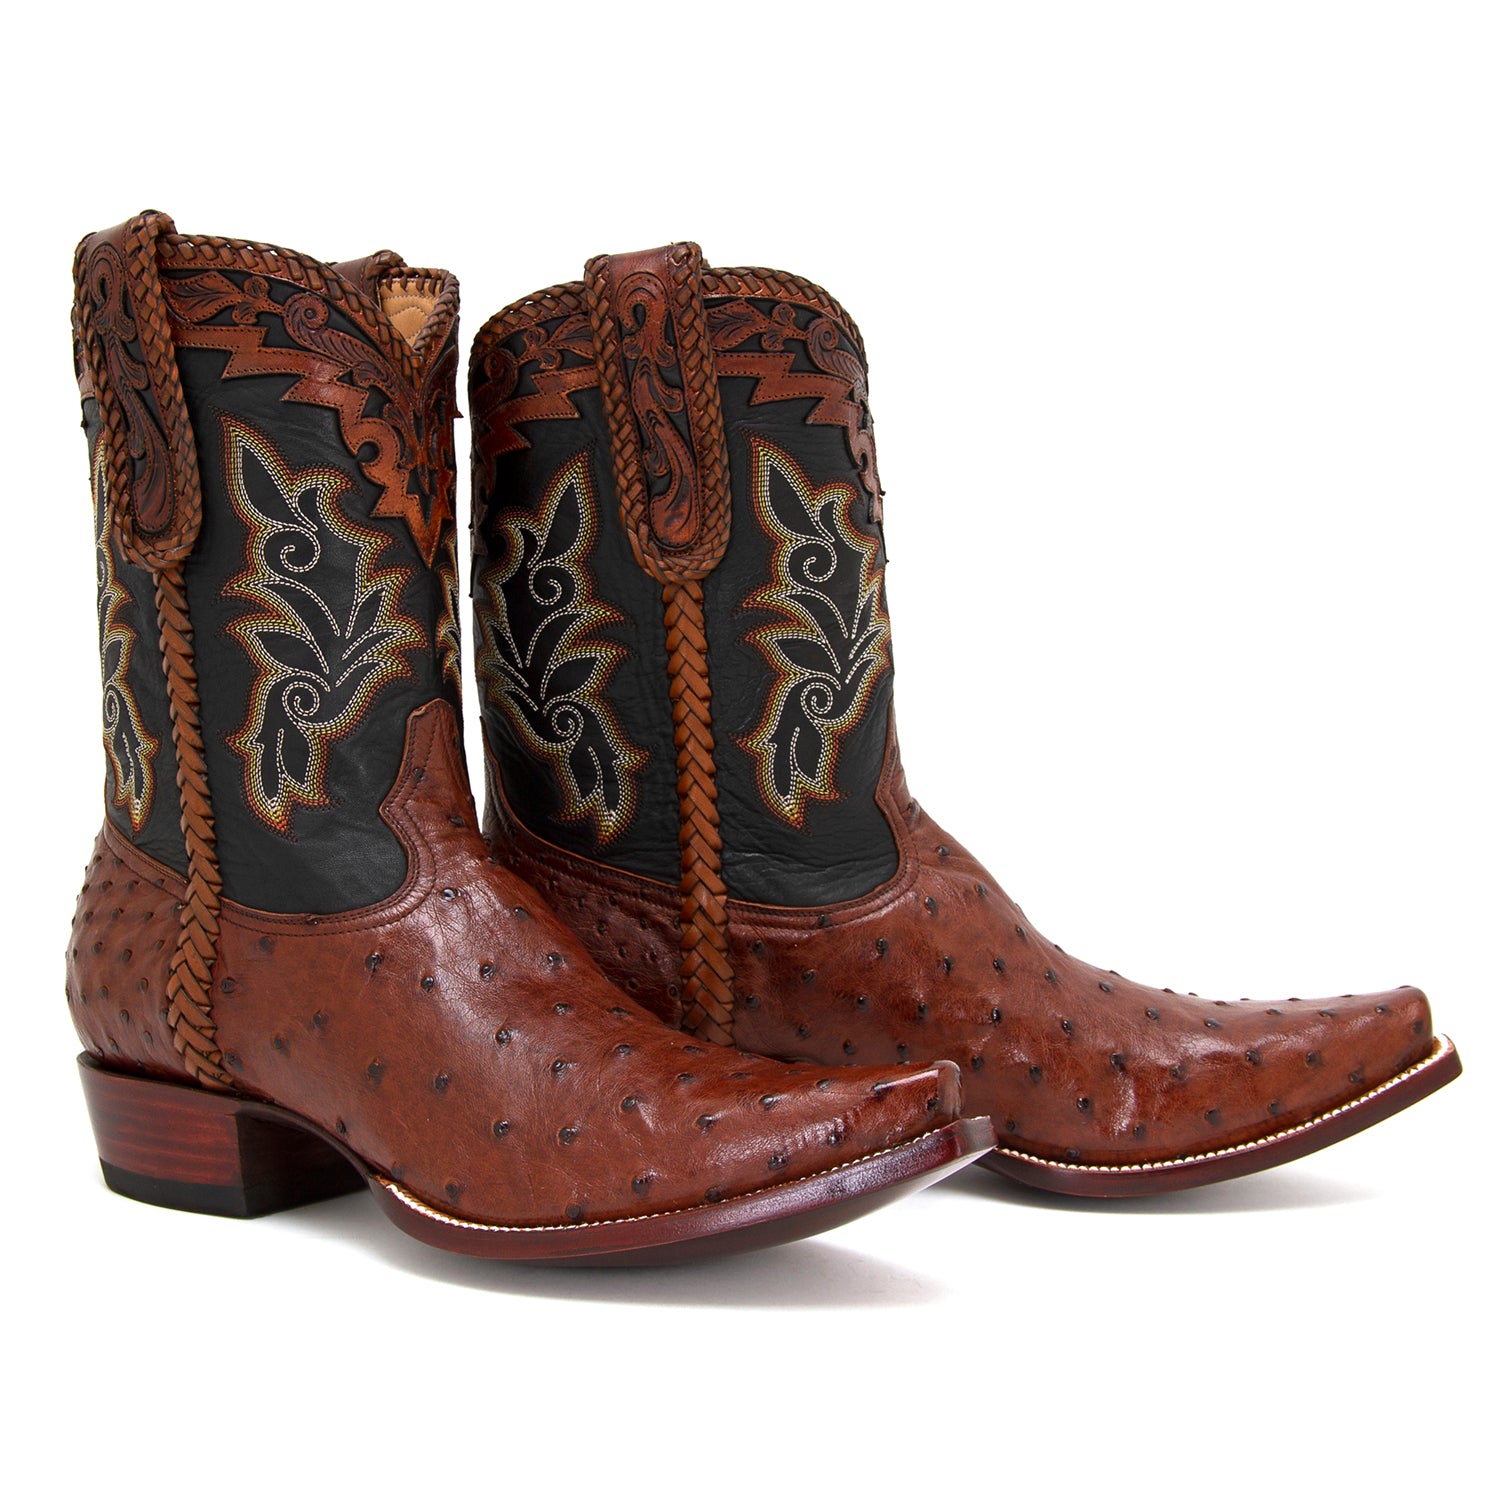 premium heritage boots